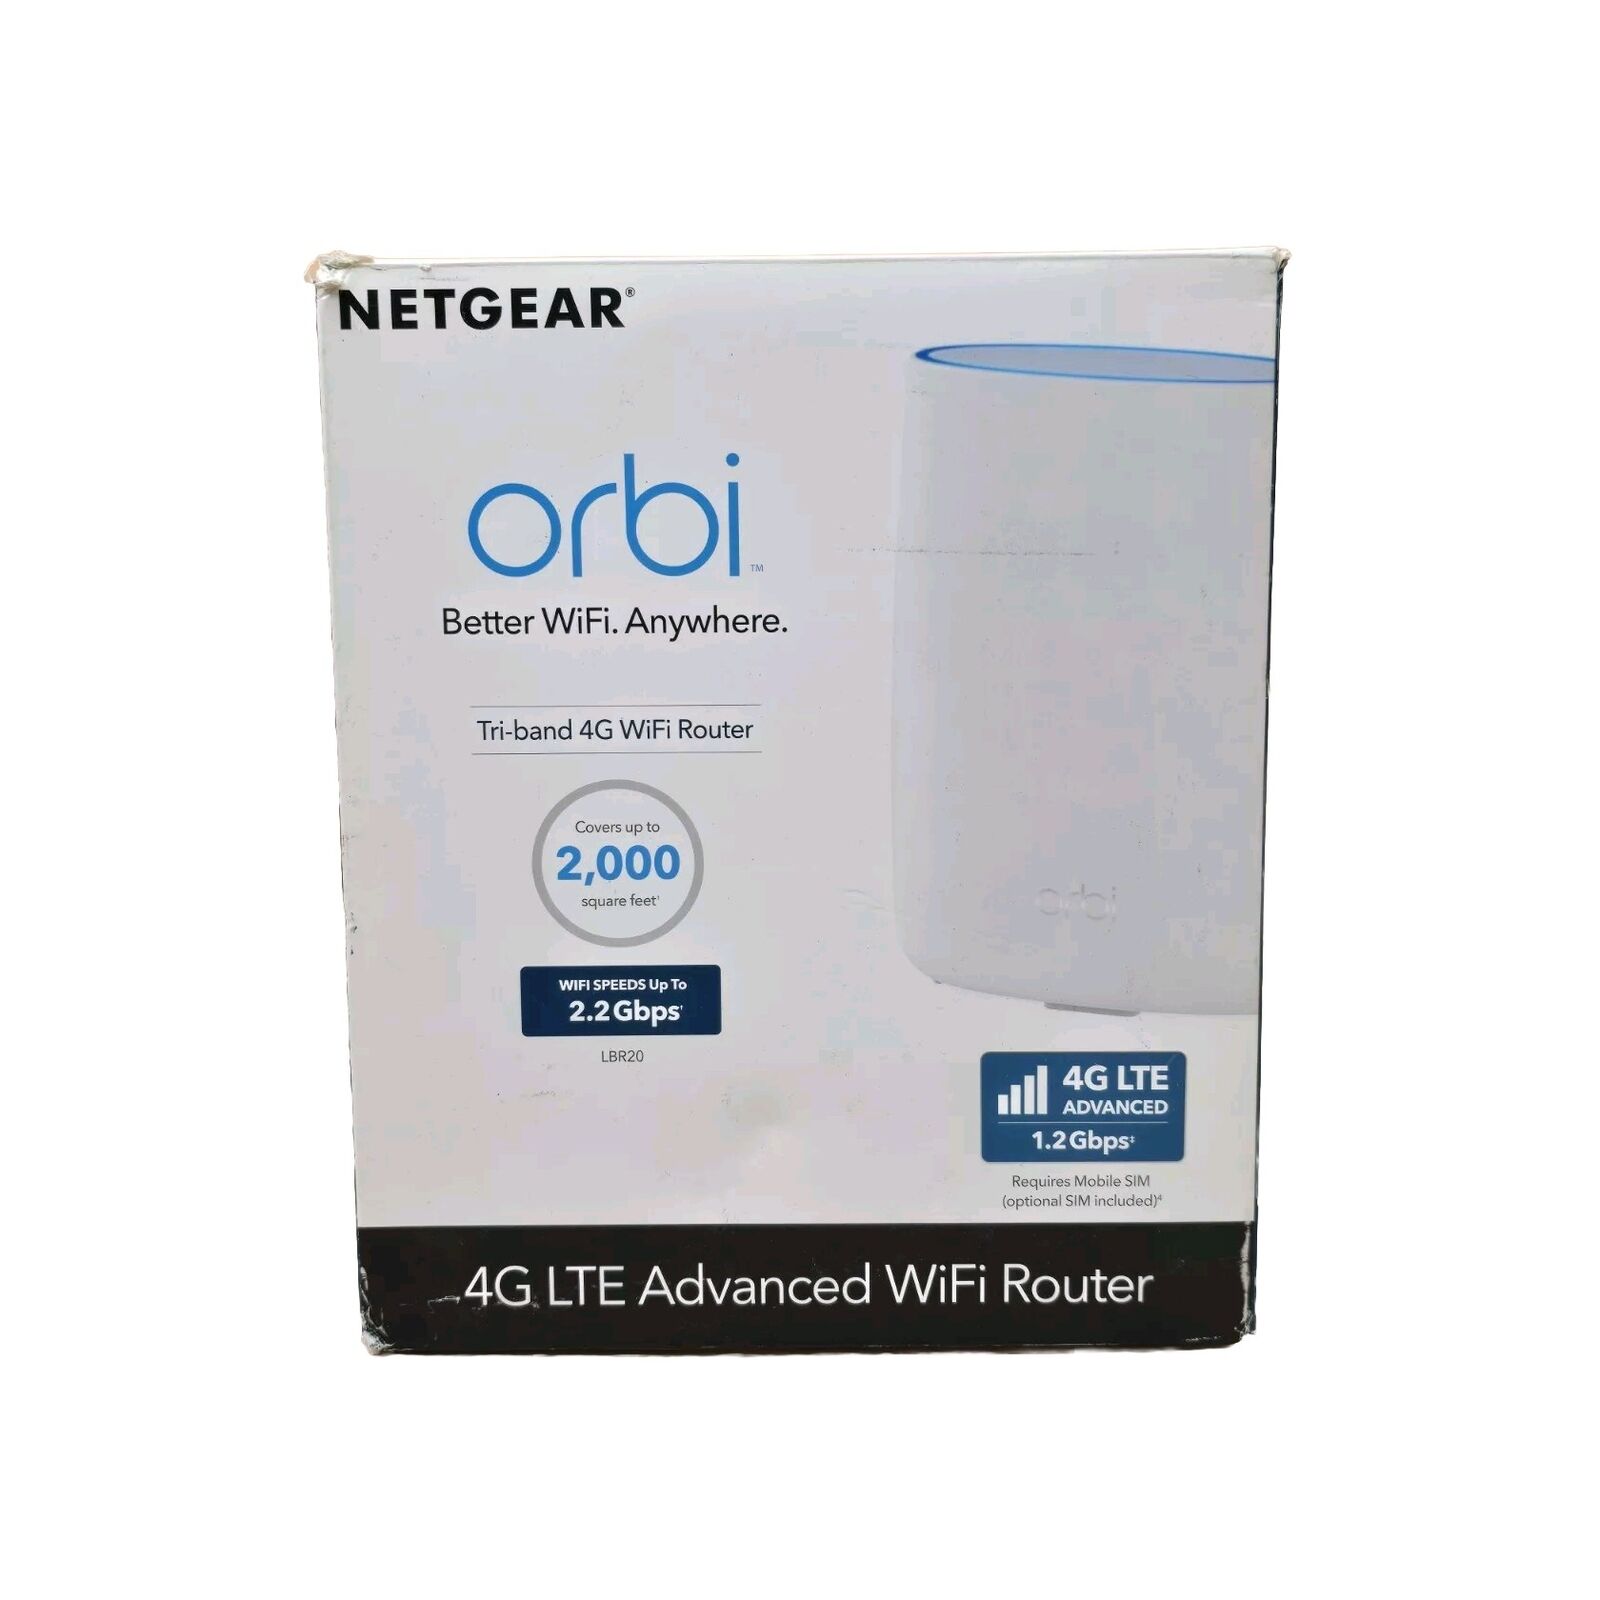 Netgear Orbi LBR20 Tri-Band 4G LTE WiFi Home Router 2.2 Gbps Speed Open Box (D)